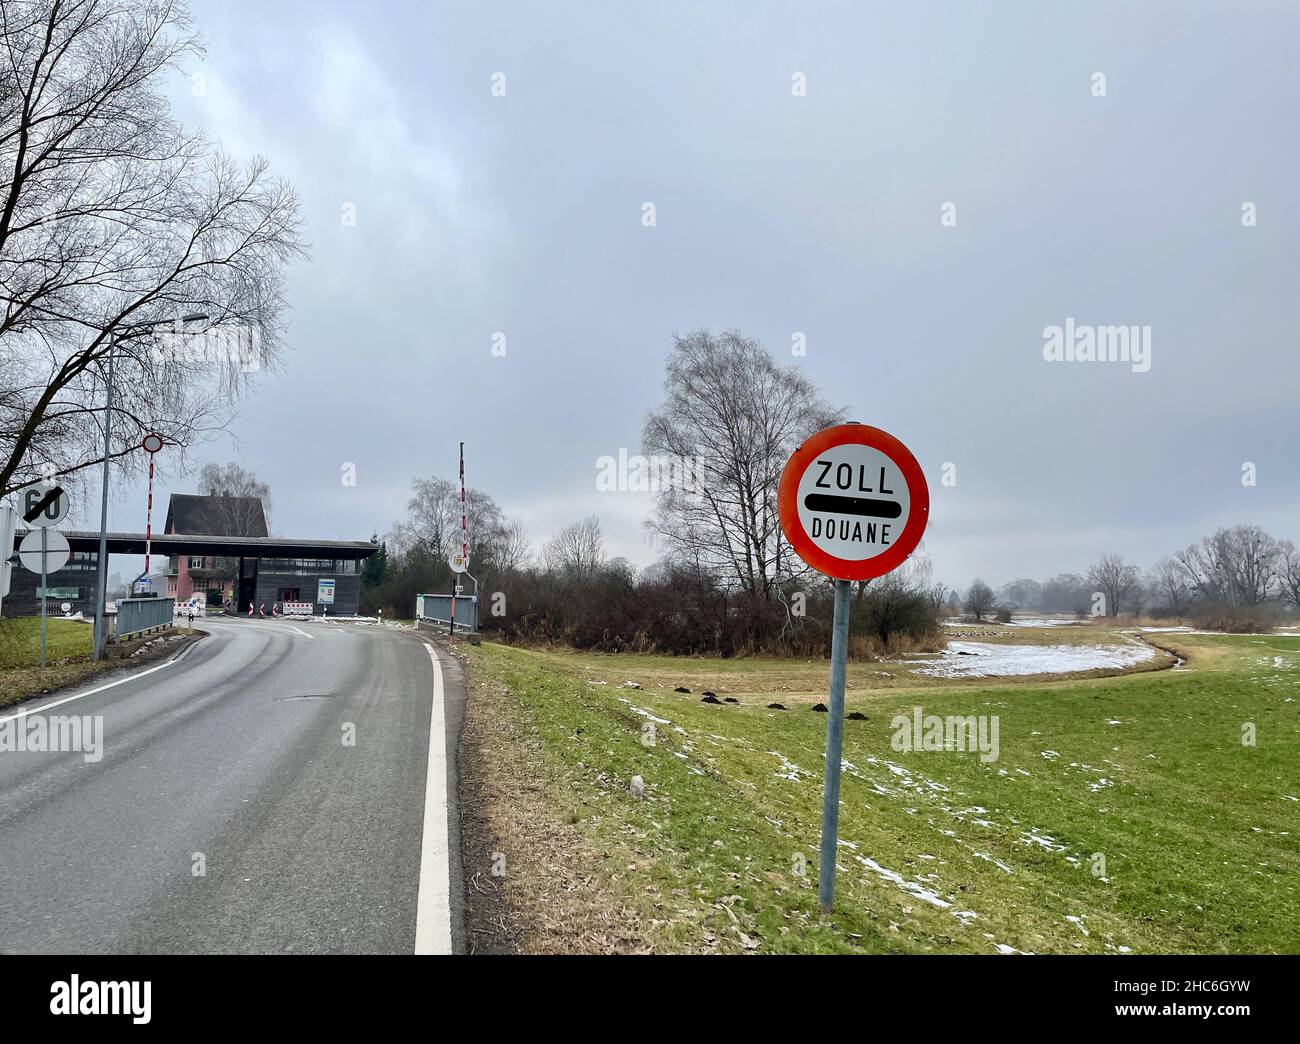 Feldkirch, Austria, 19.12.2021. Rural border crossing between Austria and Liechtenstein with road sign indicating customs, Zoll, douane. Stock Photo